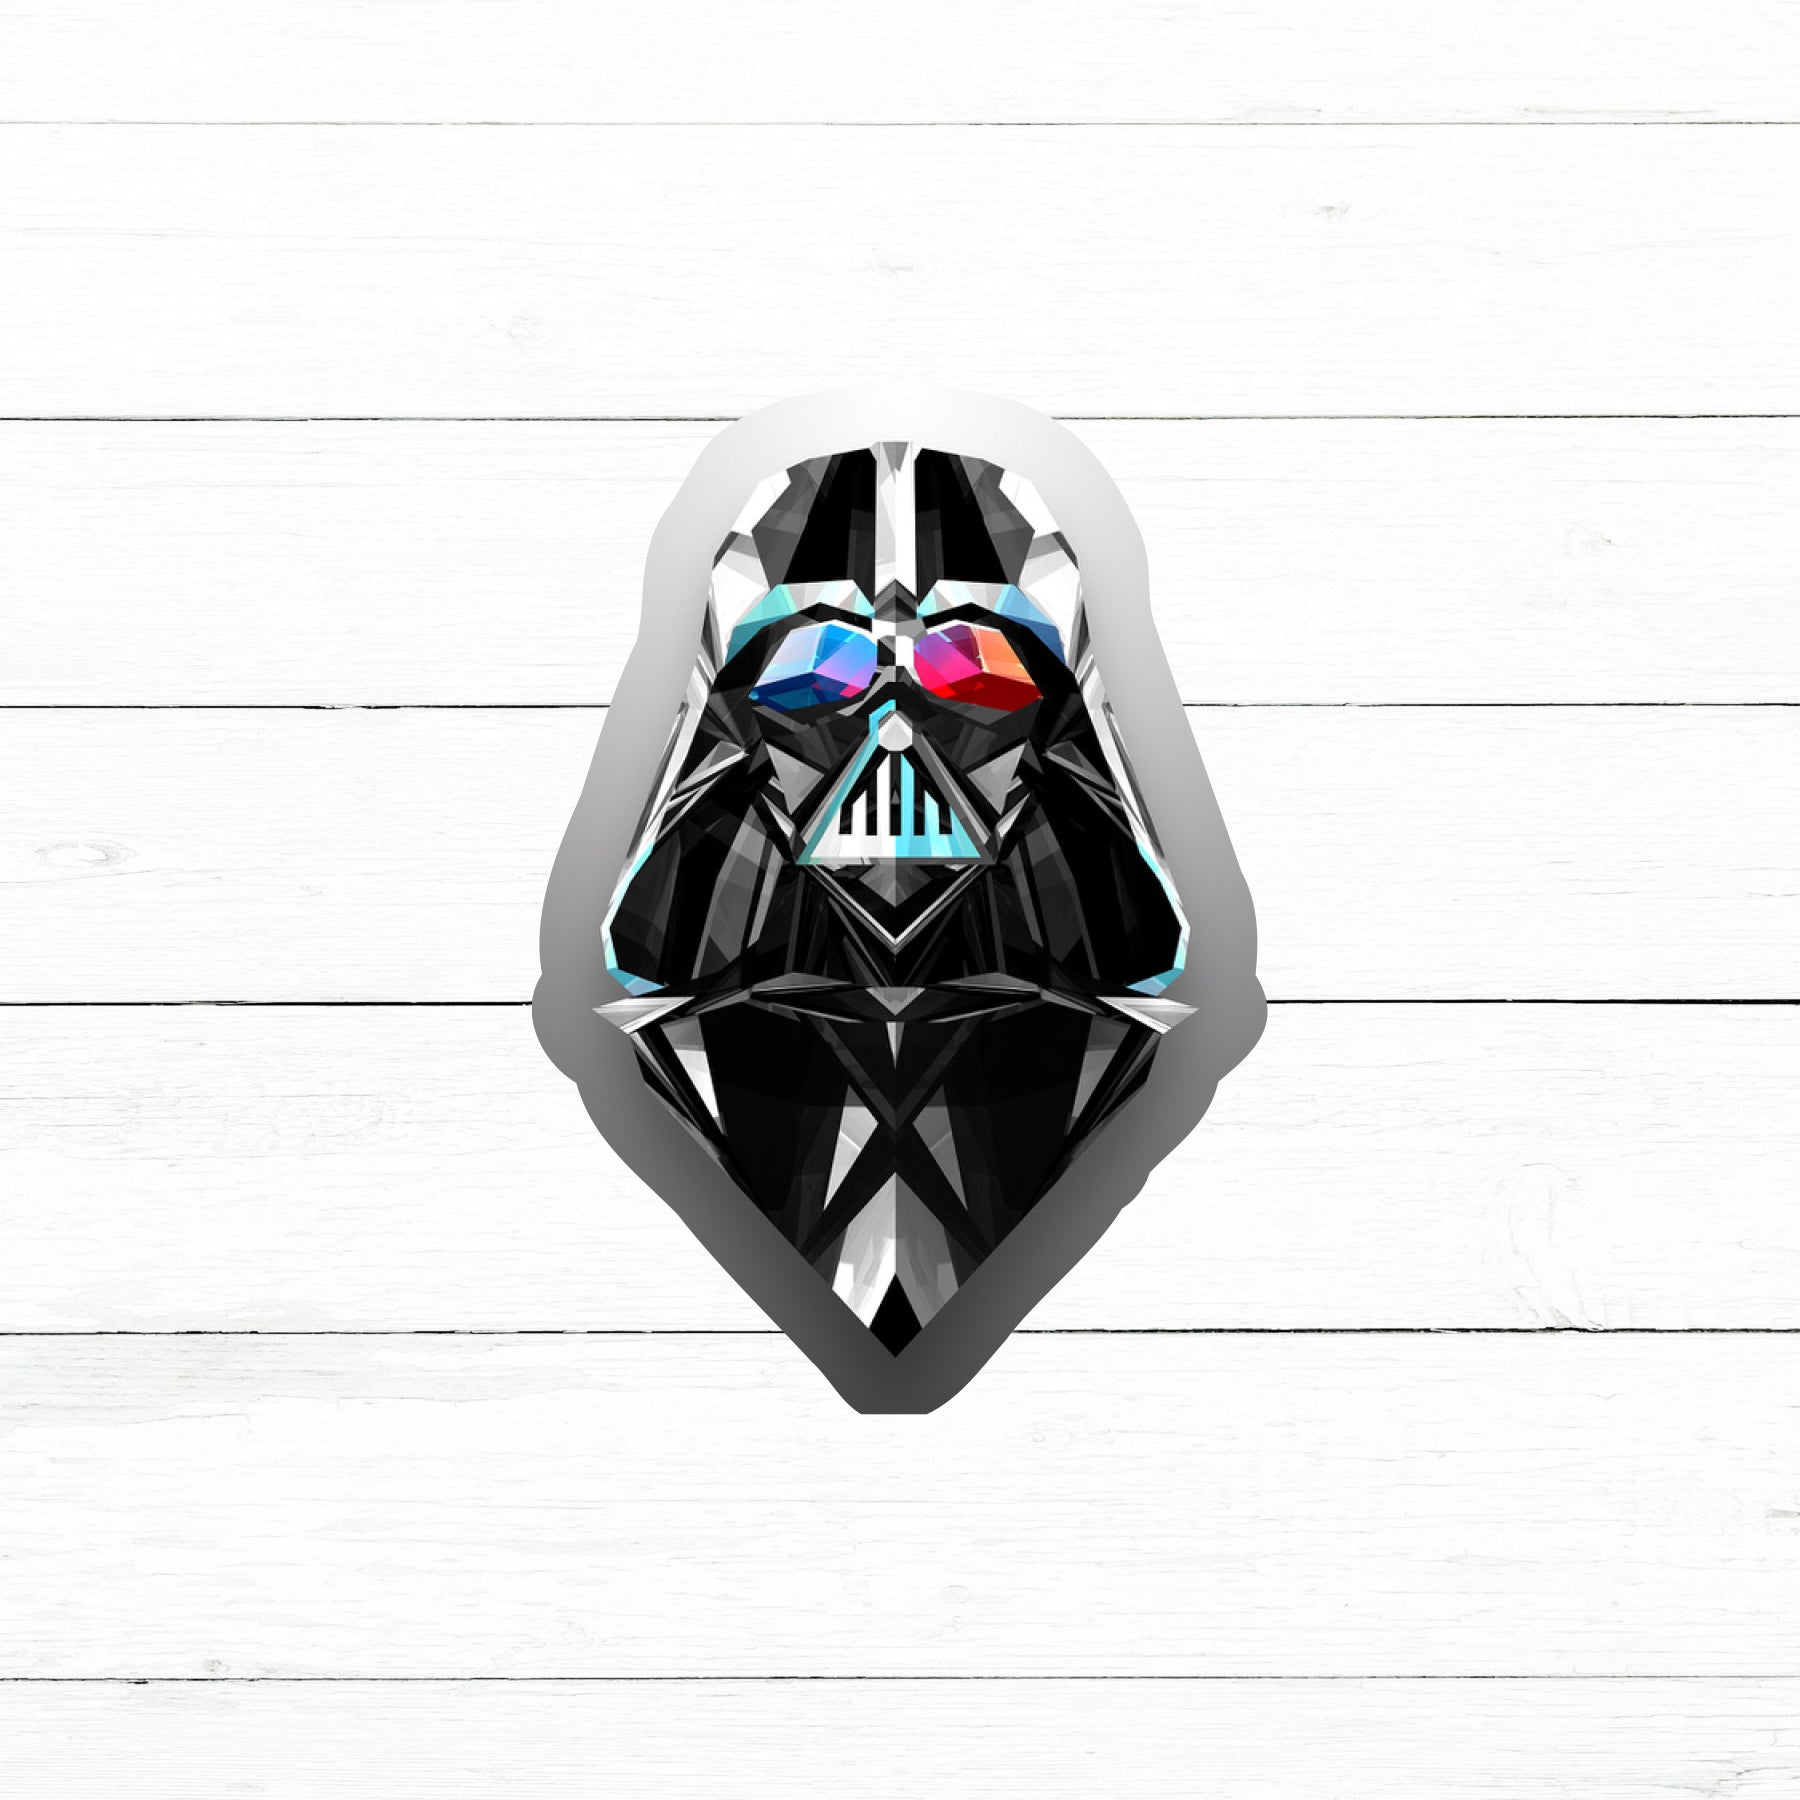 Star Wars Darth Vader Vinyl Sticker Decal